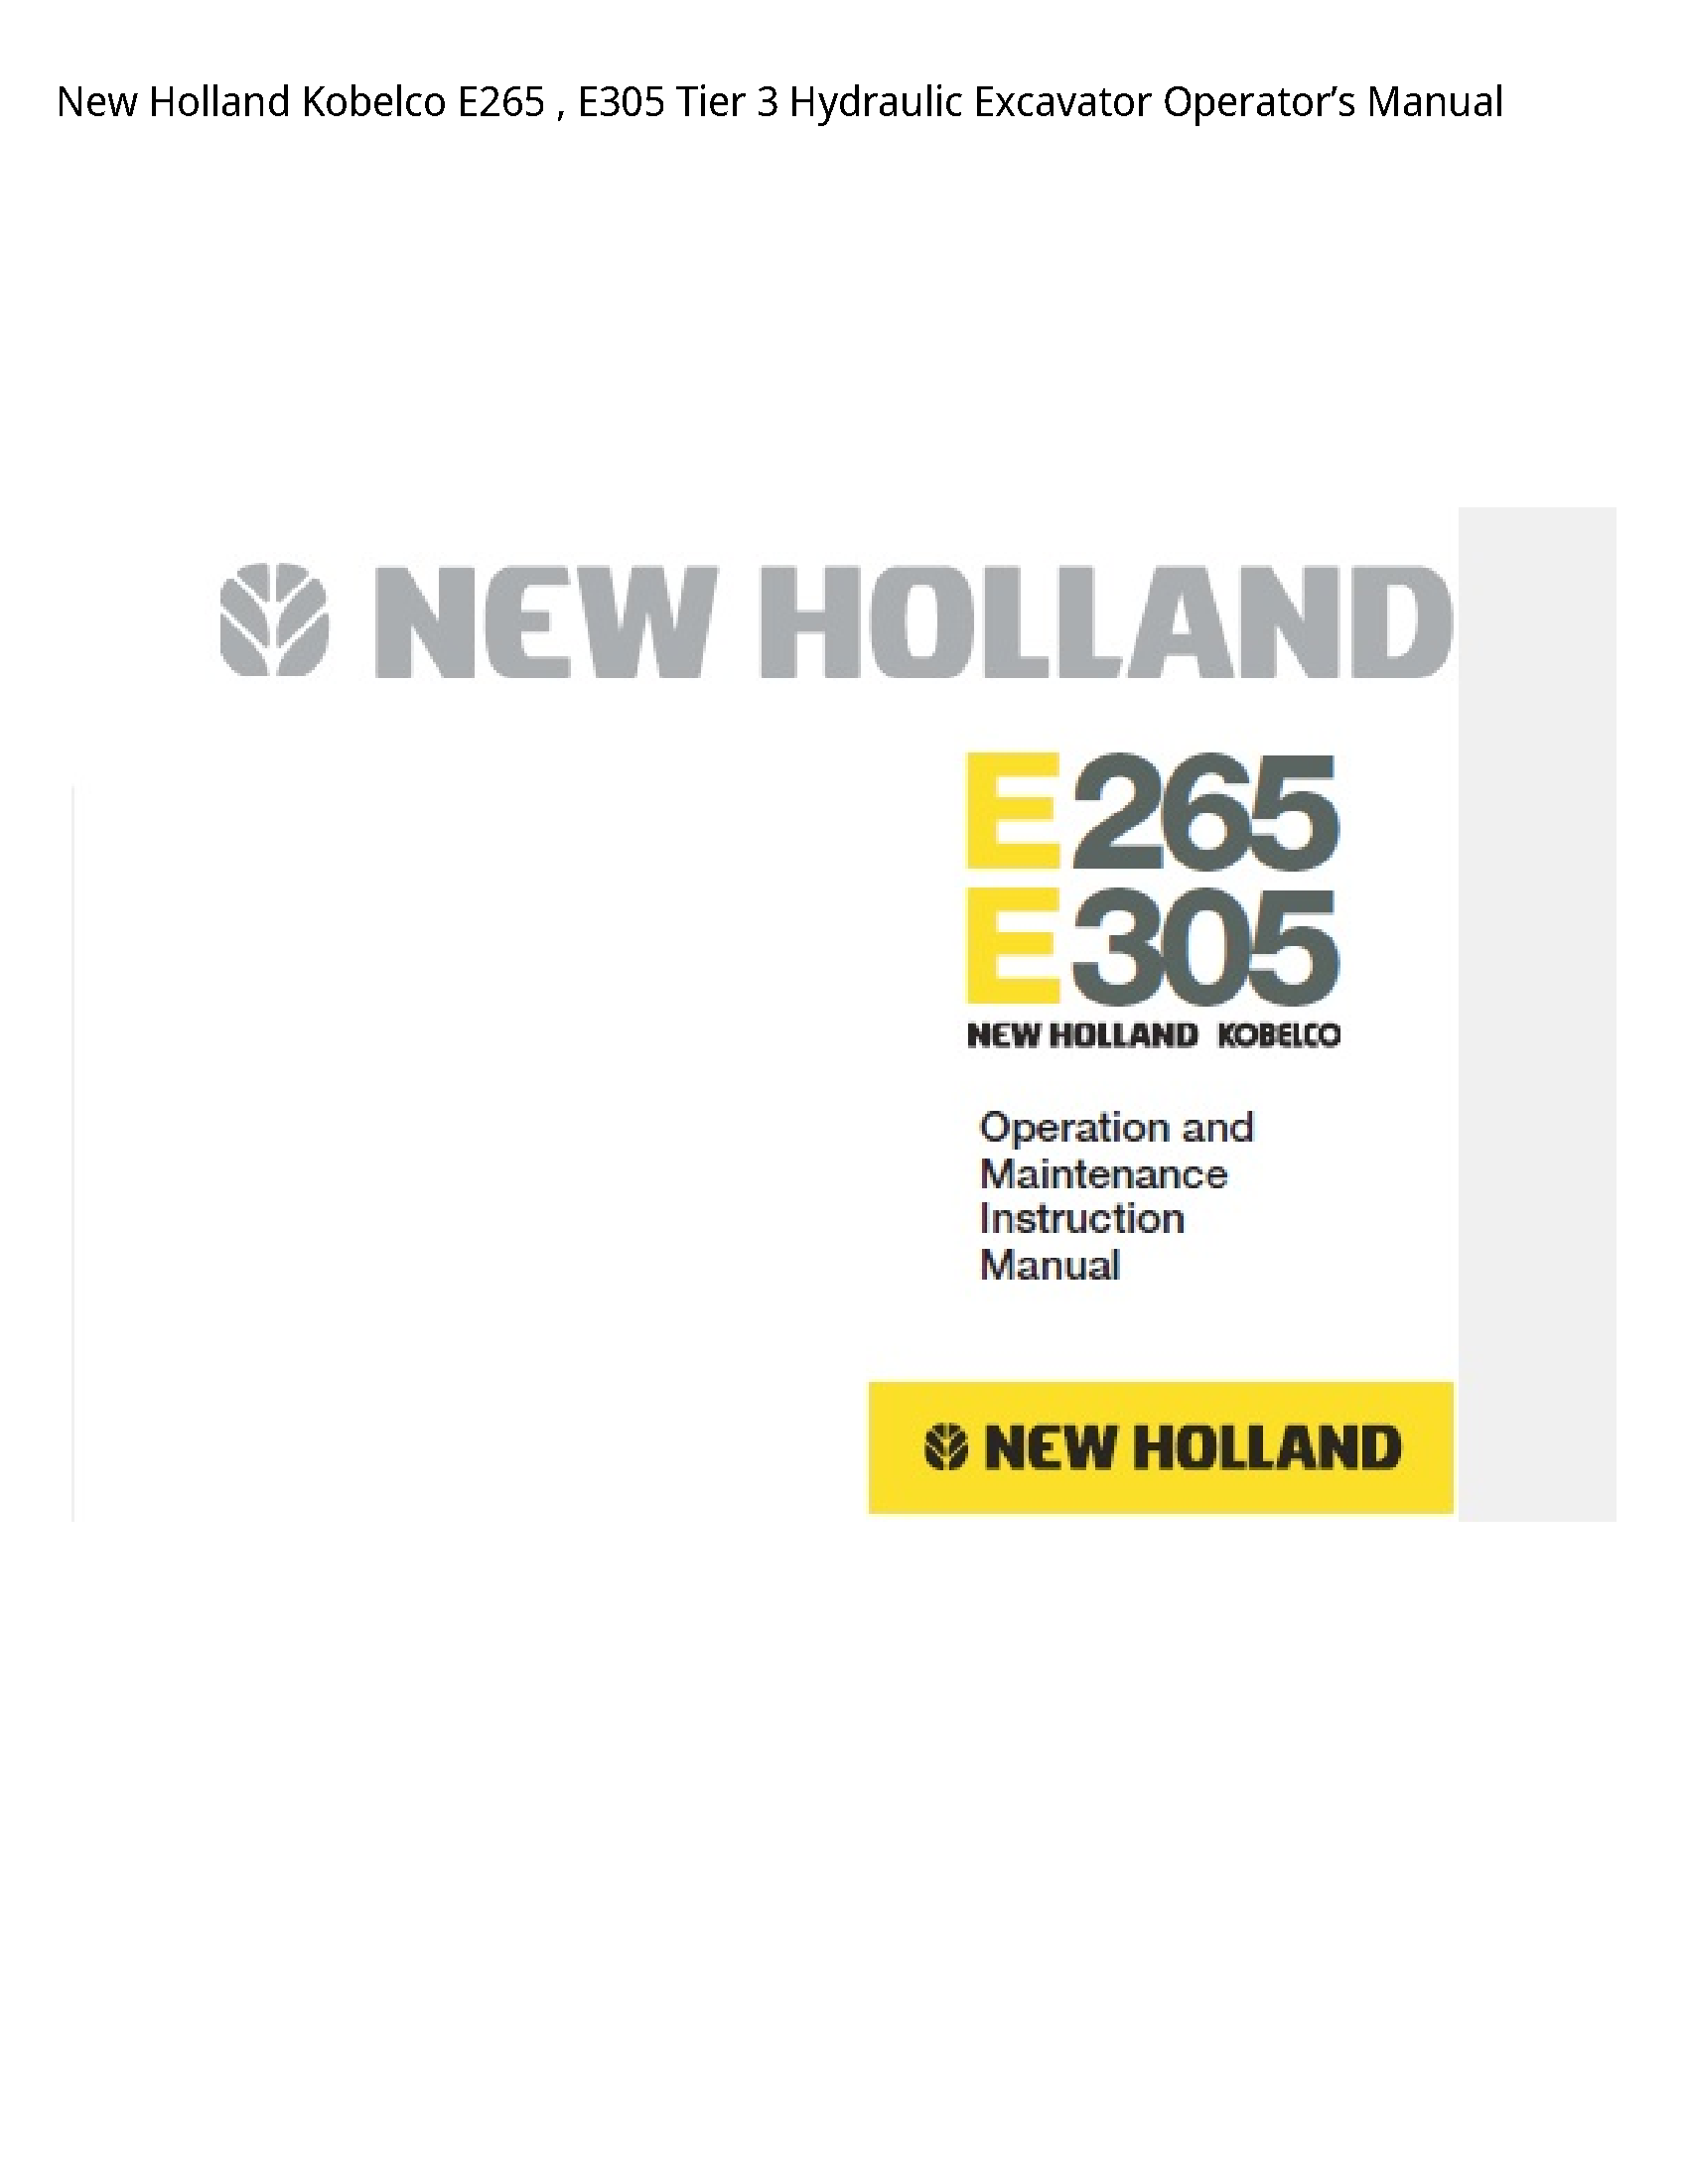 New Holland E265 Kobelco Tier Hydraulic Excavator Operator’s manual